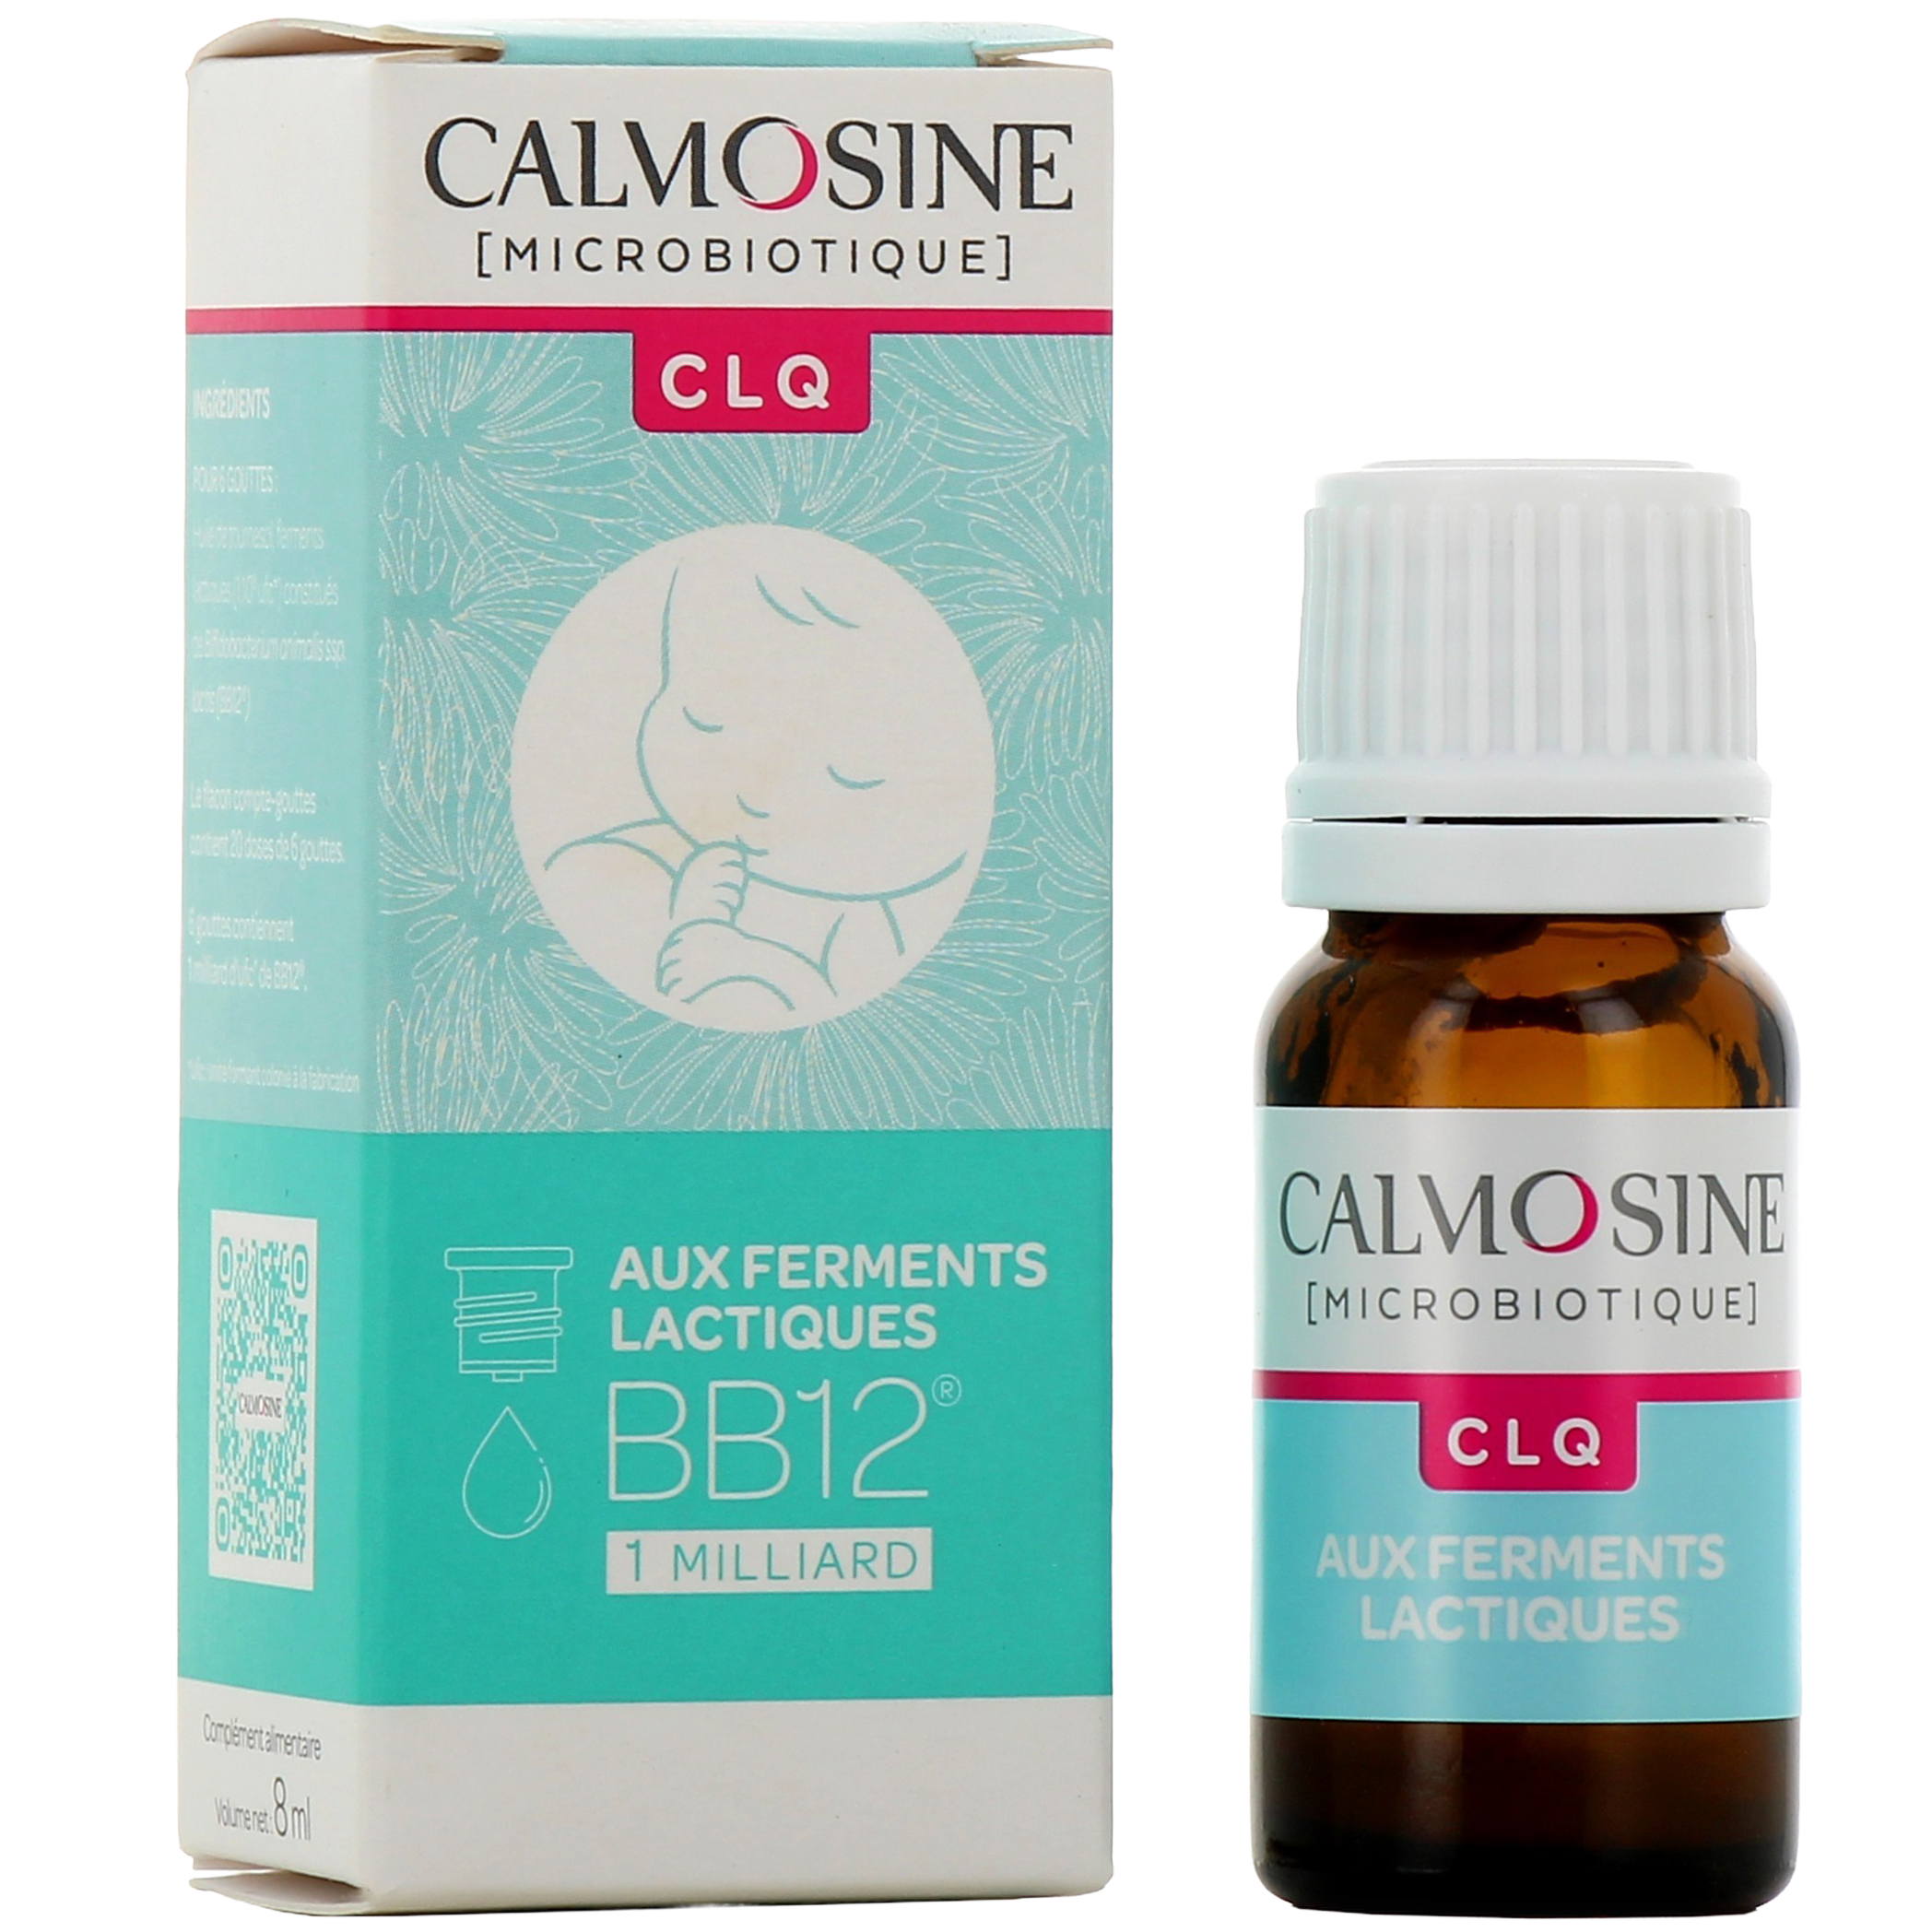 calmosine digestion bio dosettes x 12